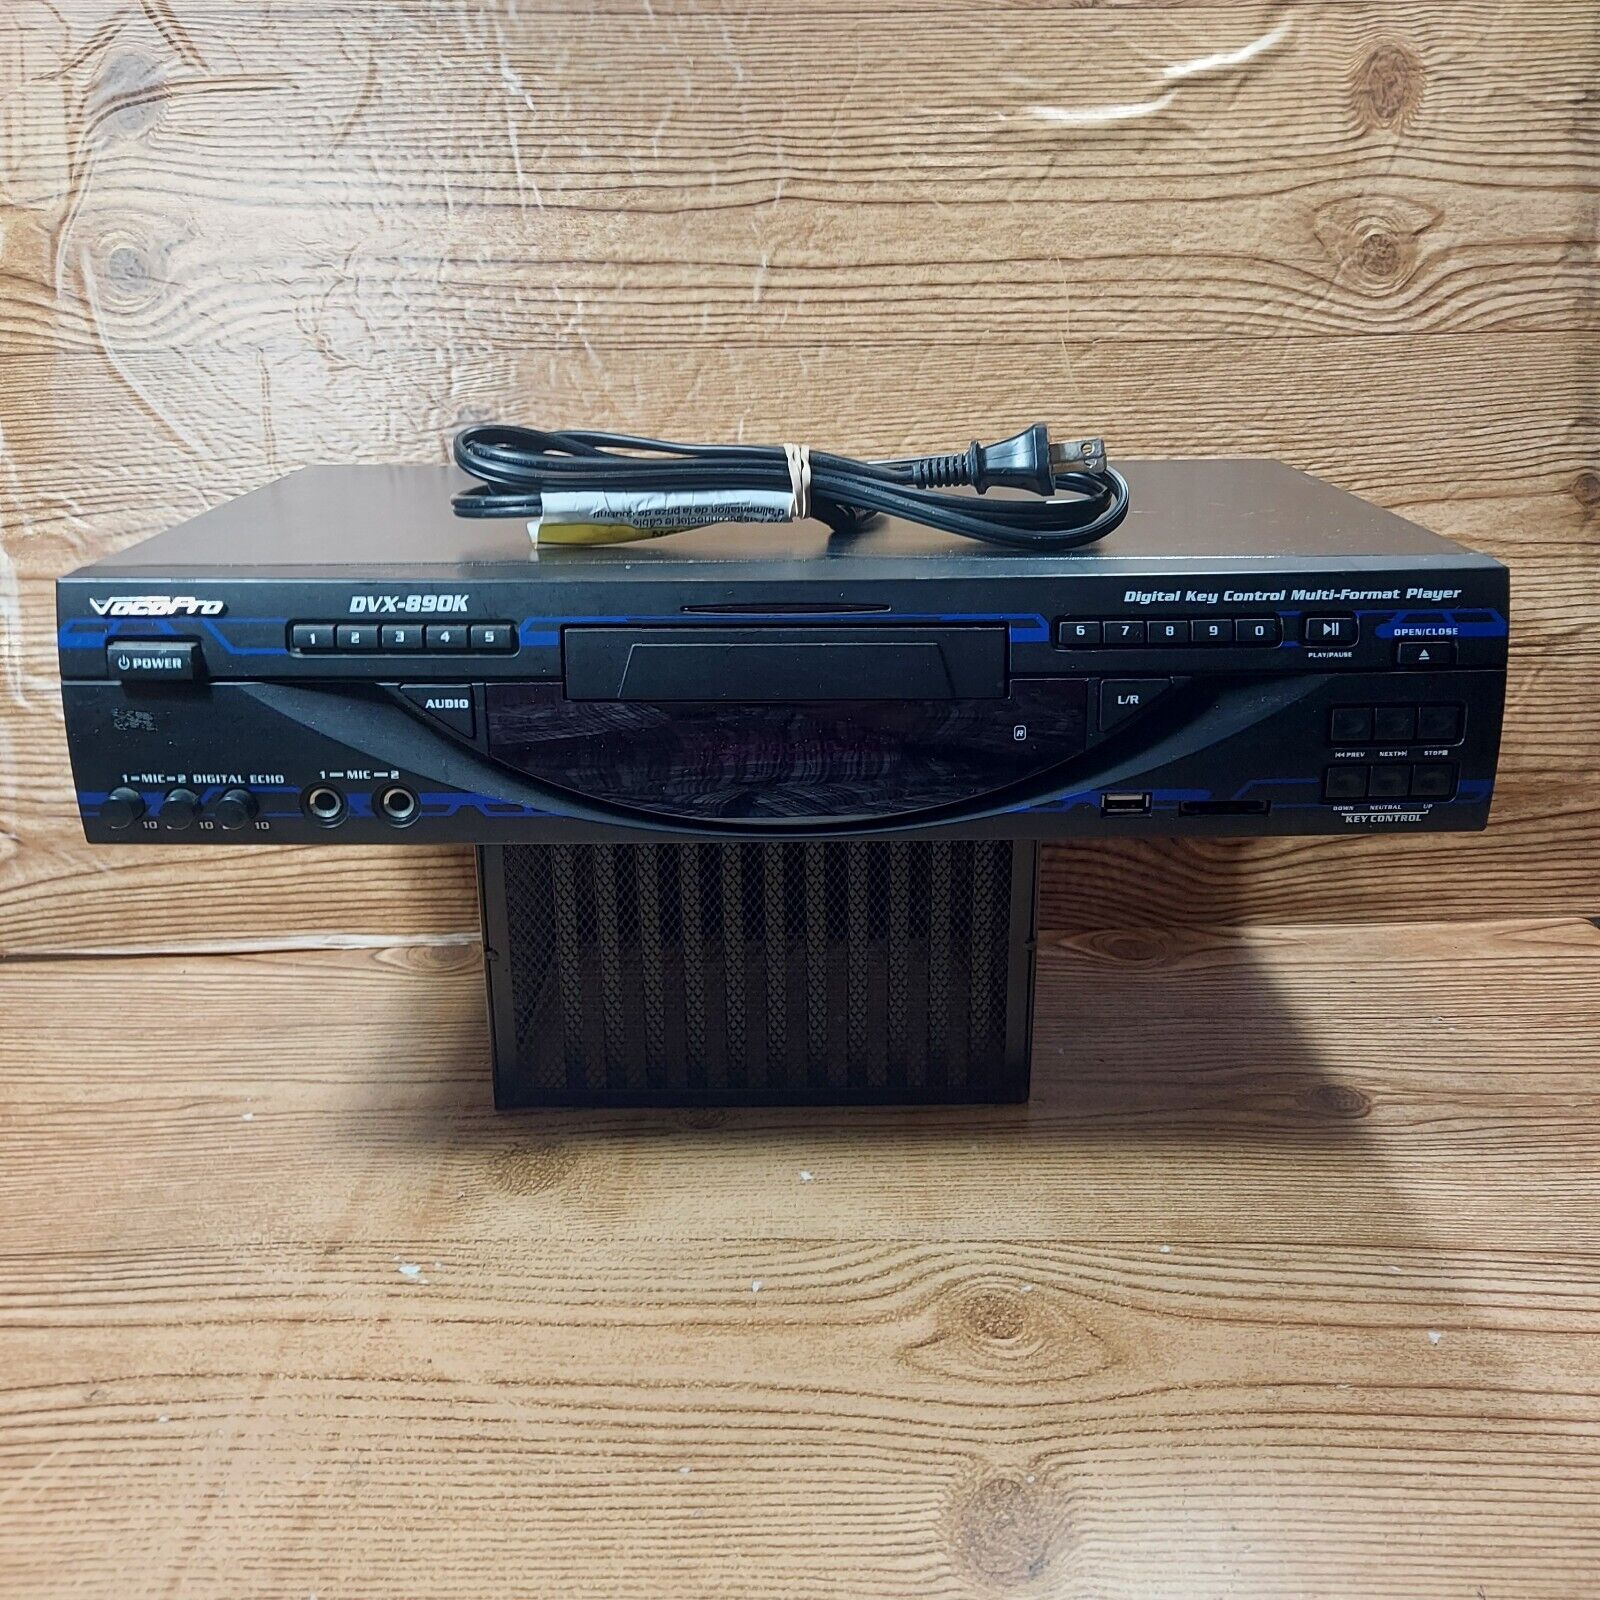 Vocopro Dvx890k Multi-format Digital Key Control Dvd Karaoke Player No Remote 